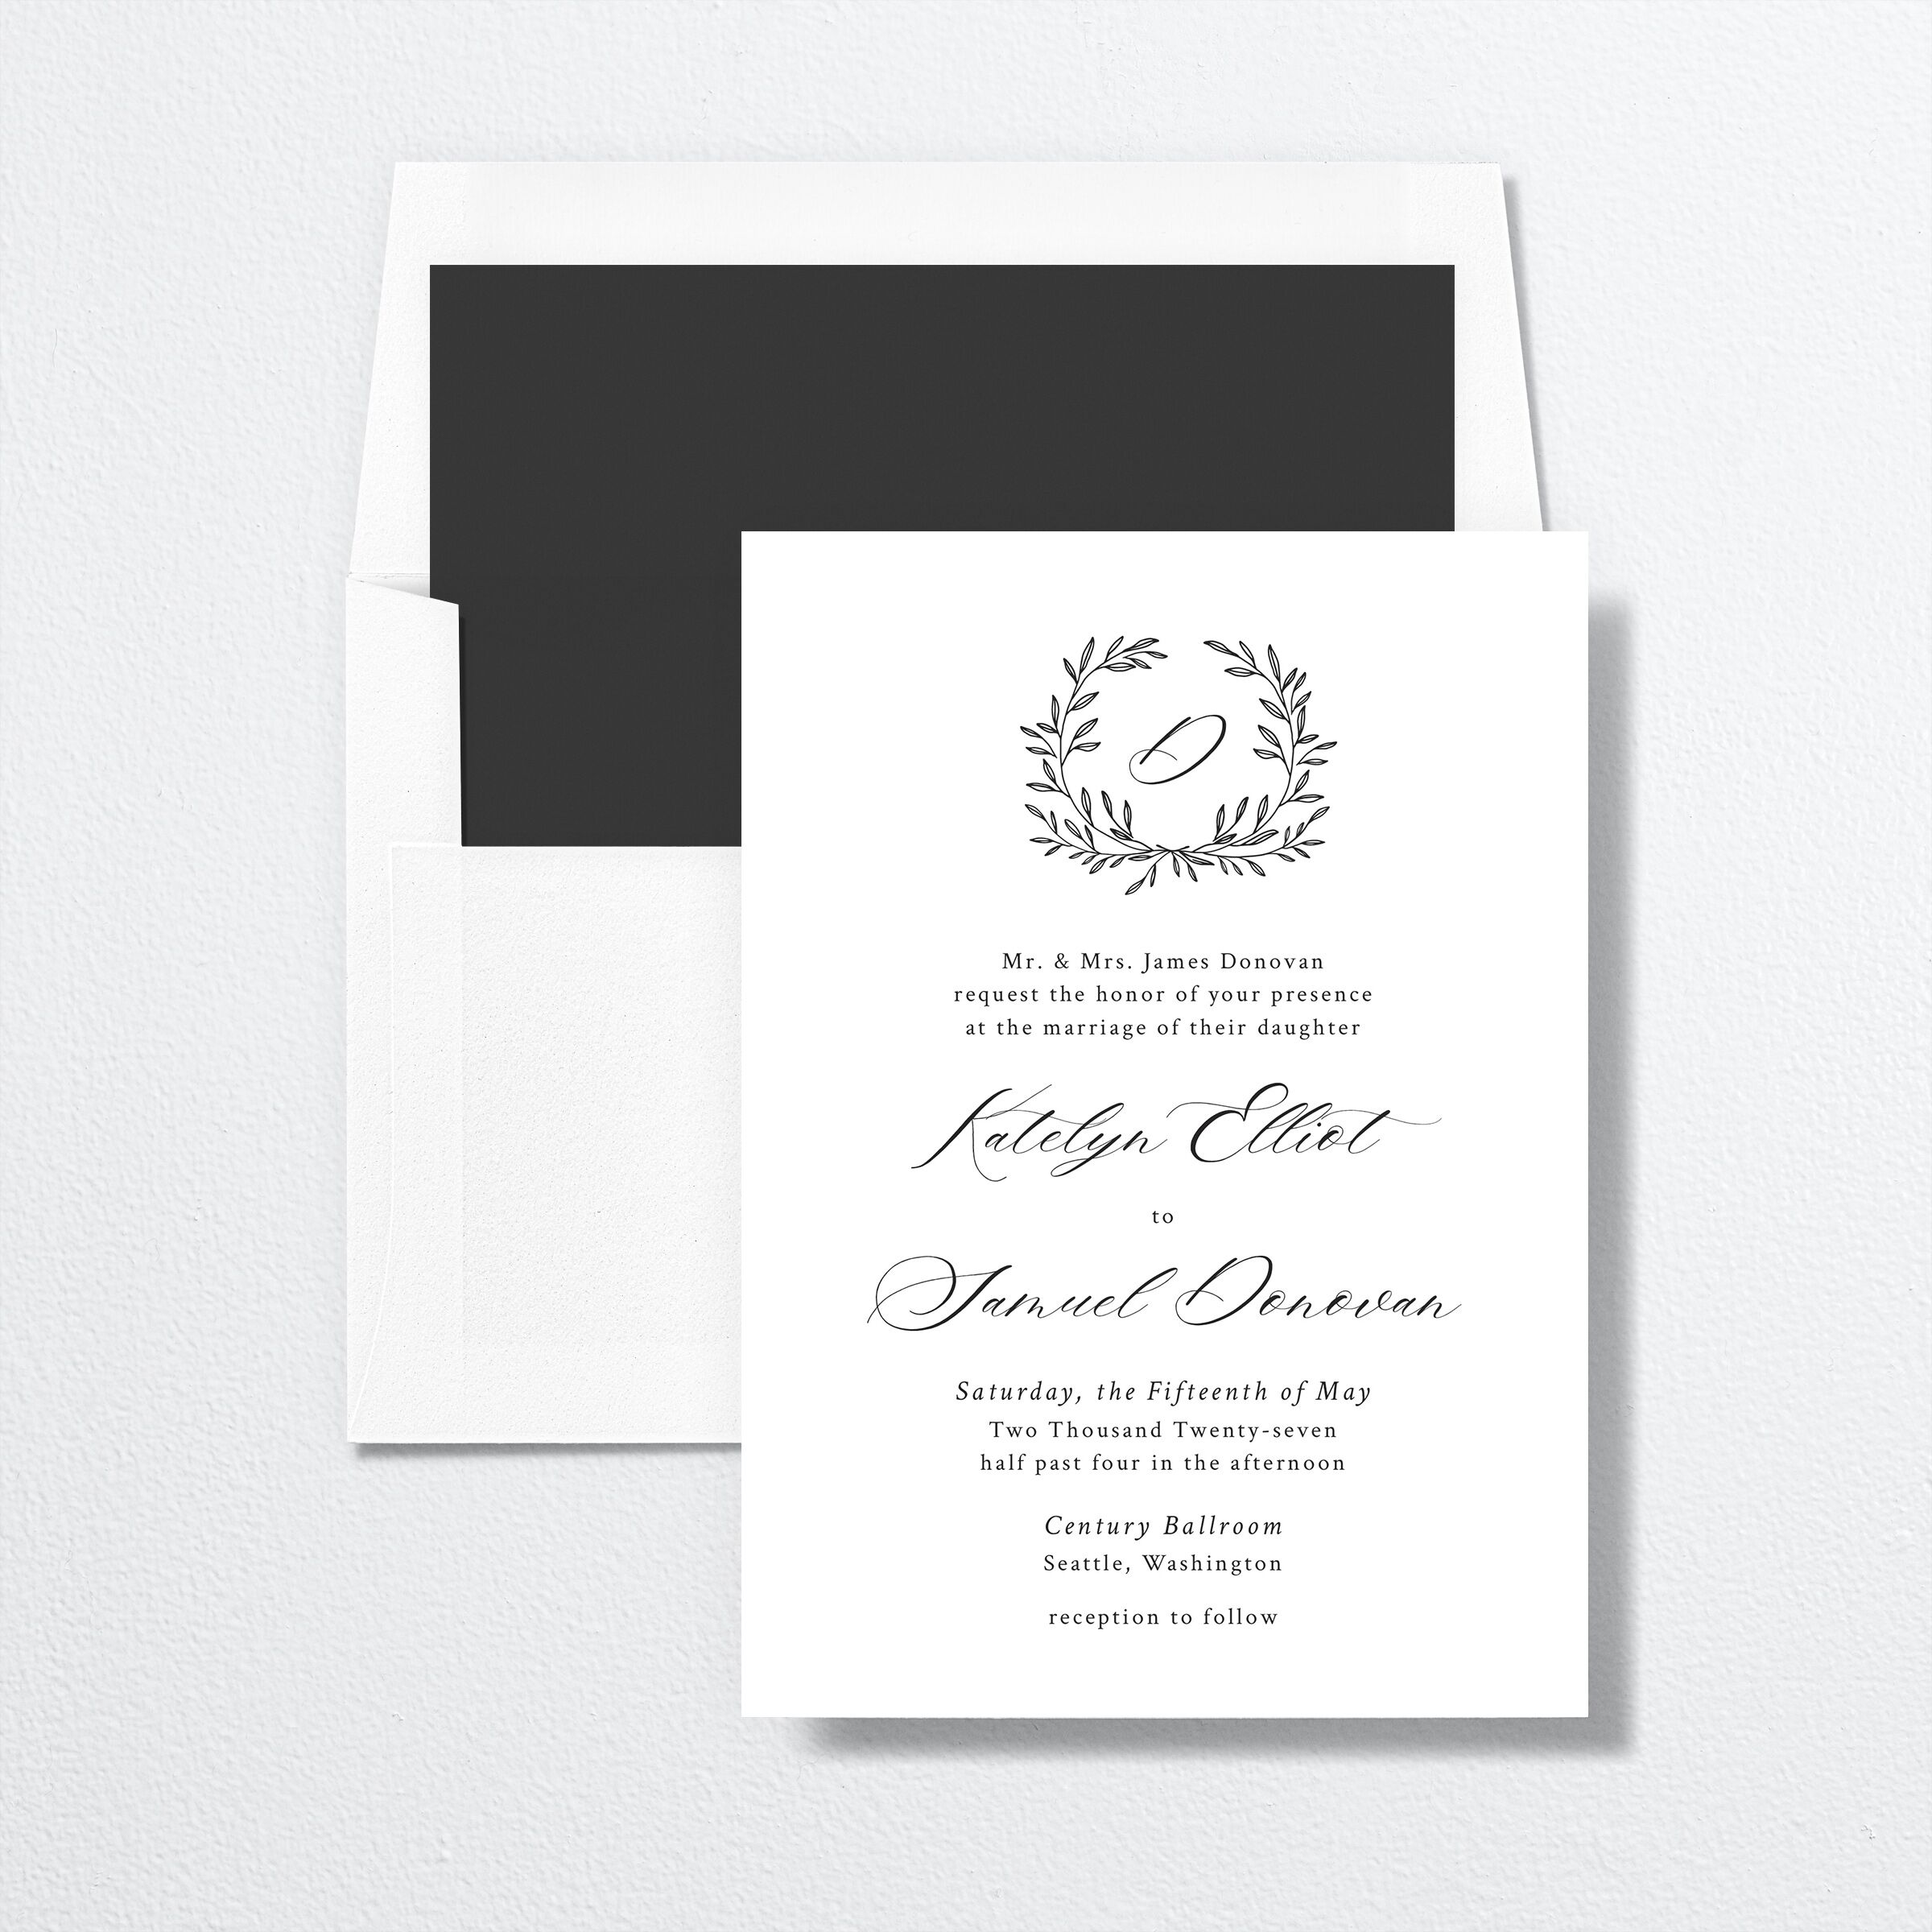 Monogram Wreath Standard Envelope Liners envelope-and-liner in black